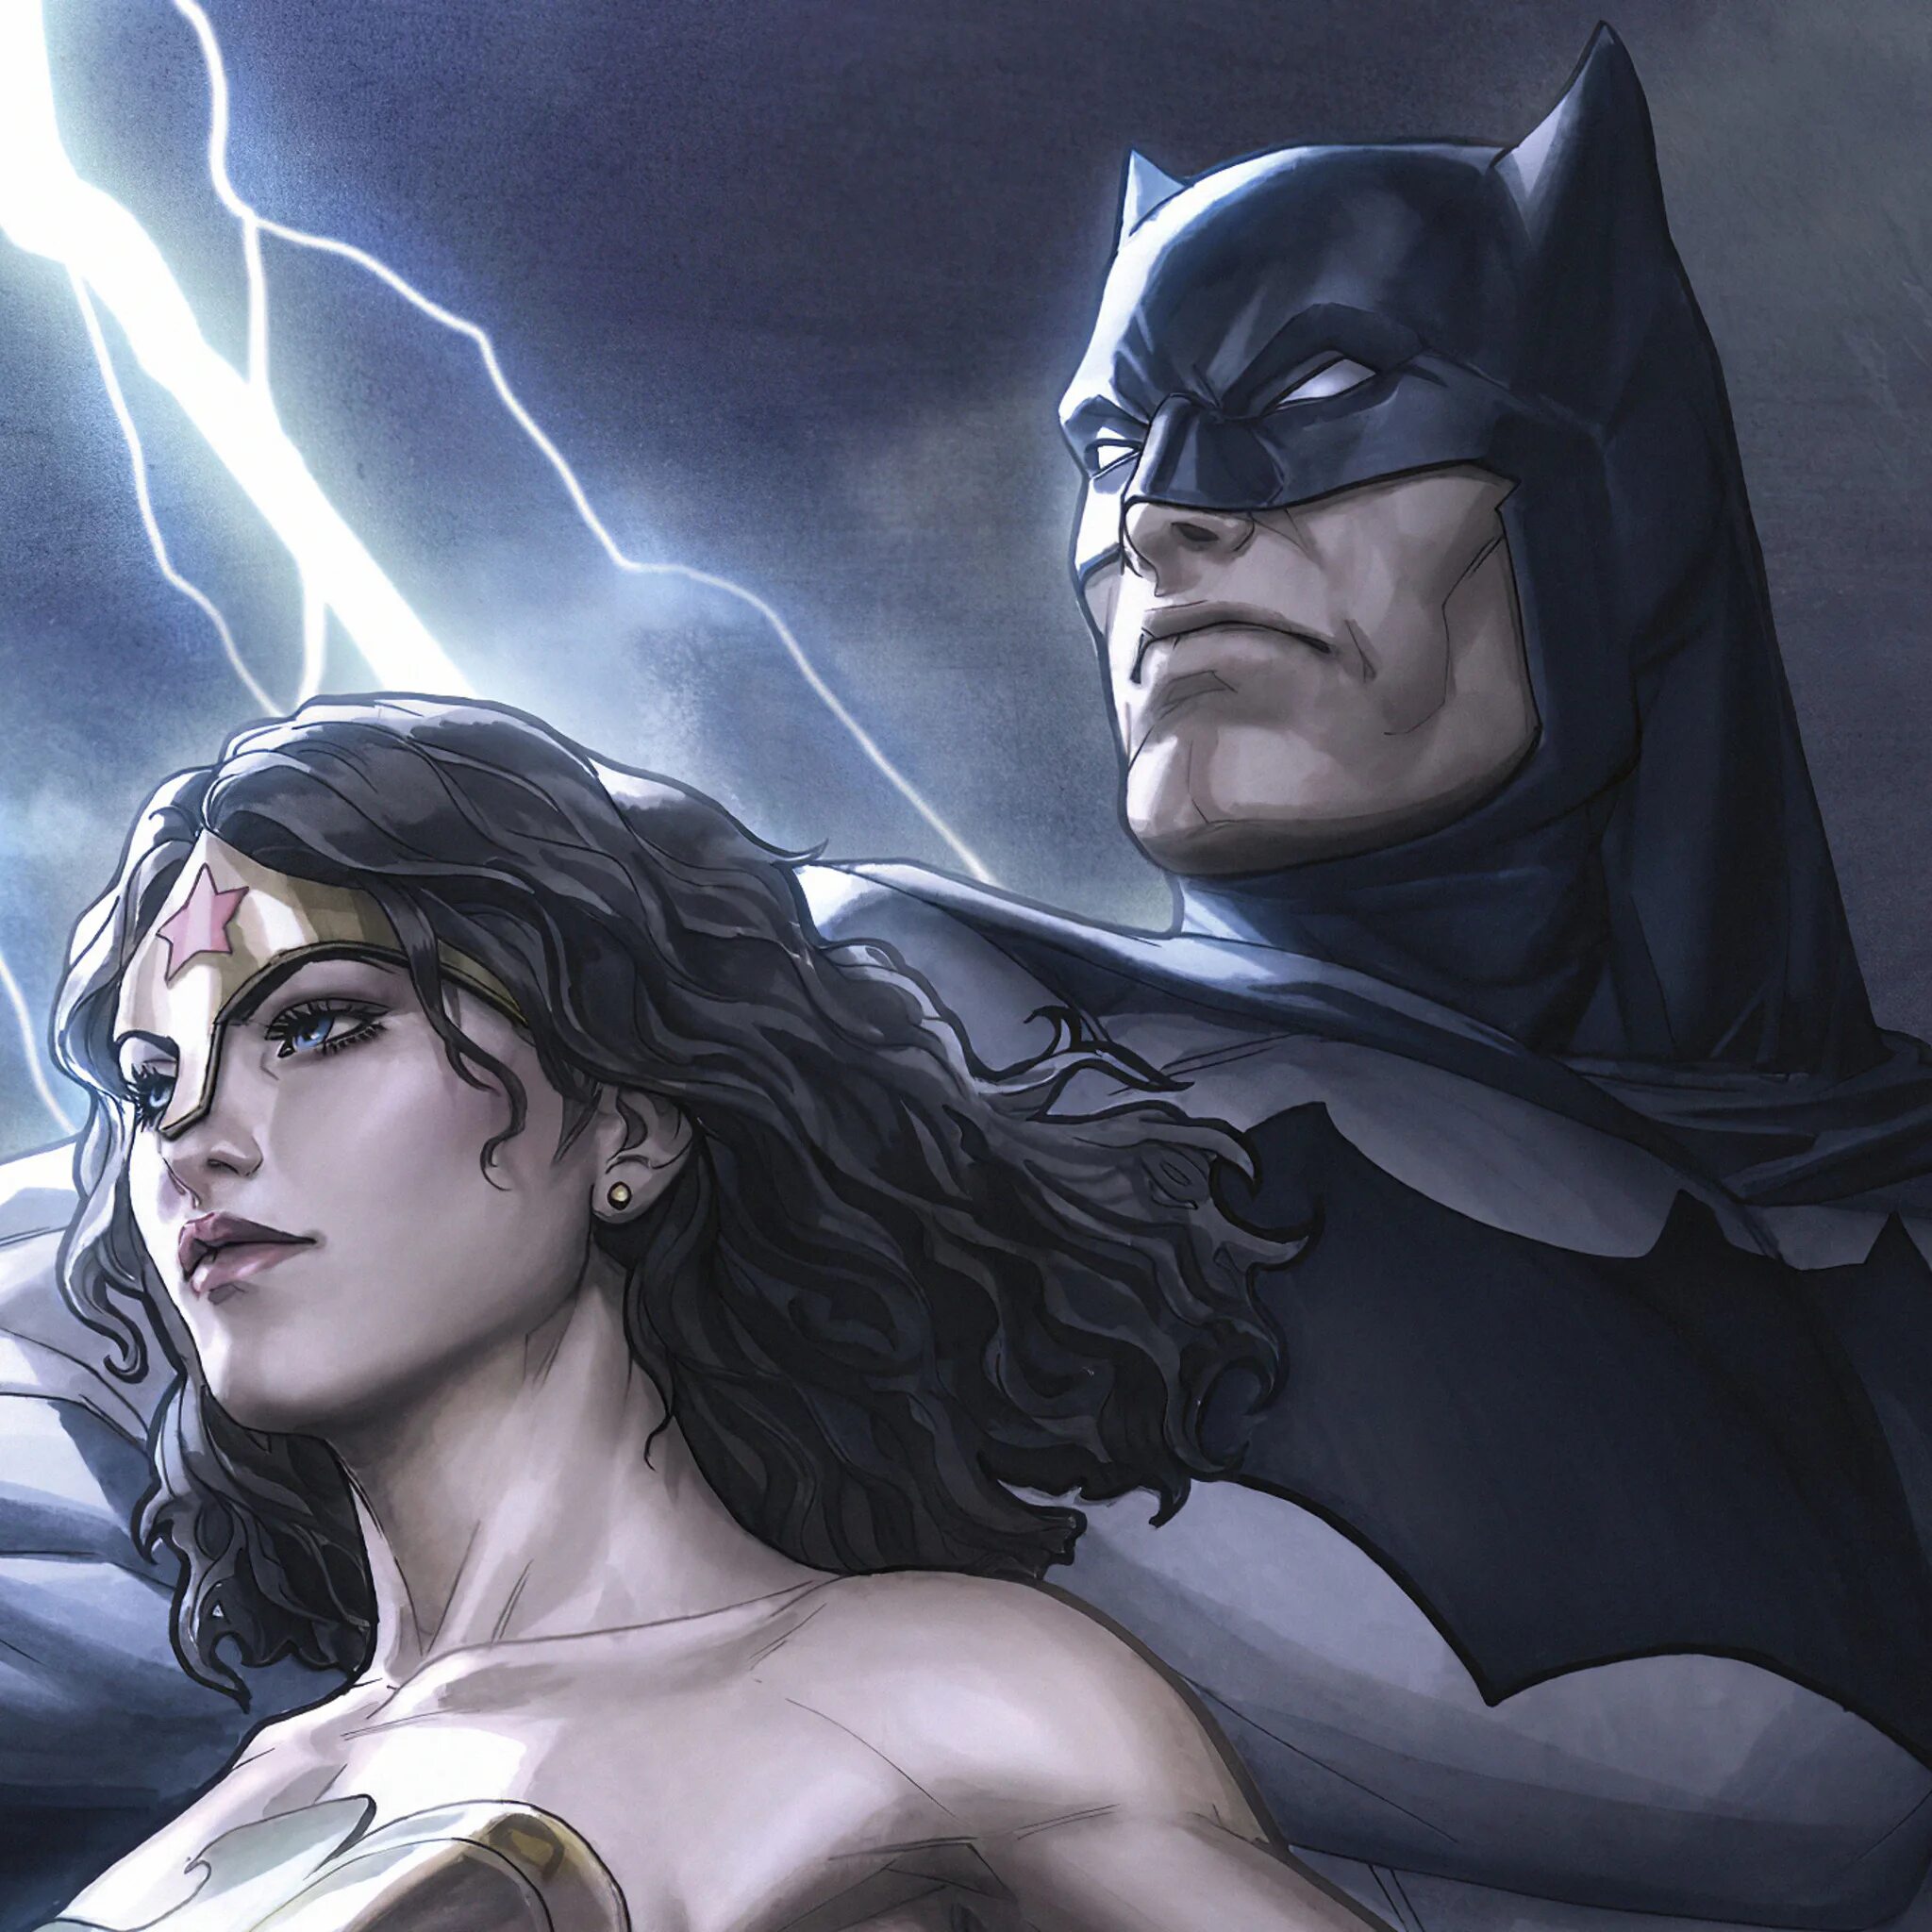 1700 бат. Бэтмен и чудо женщина. Бэтмен и Вандер Вумен. Лига справедливости Бэтмен и чудо женщина. Бэтмен и чудо женщина комиксы.